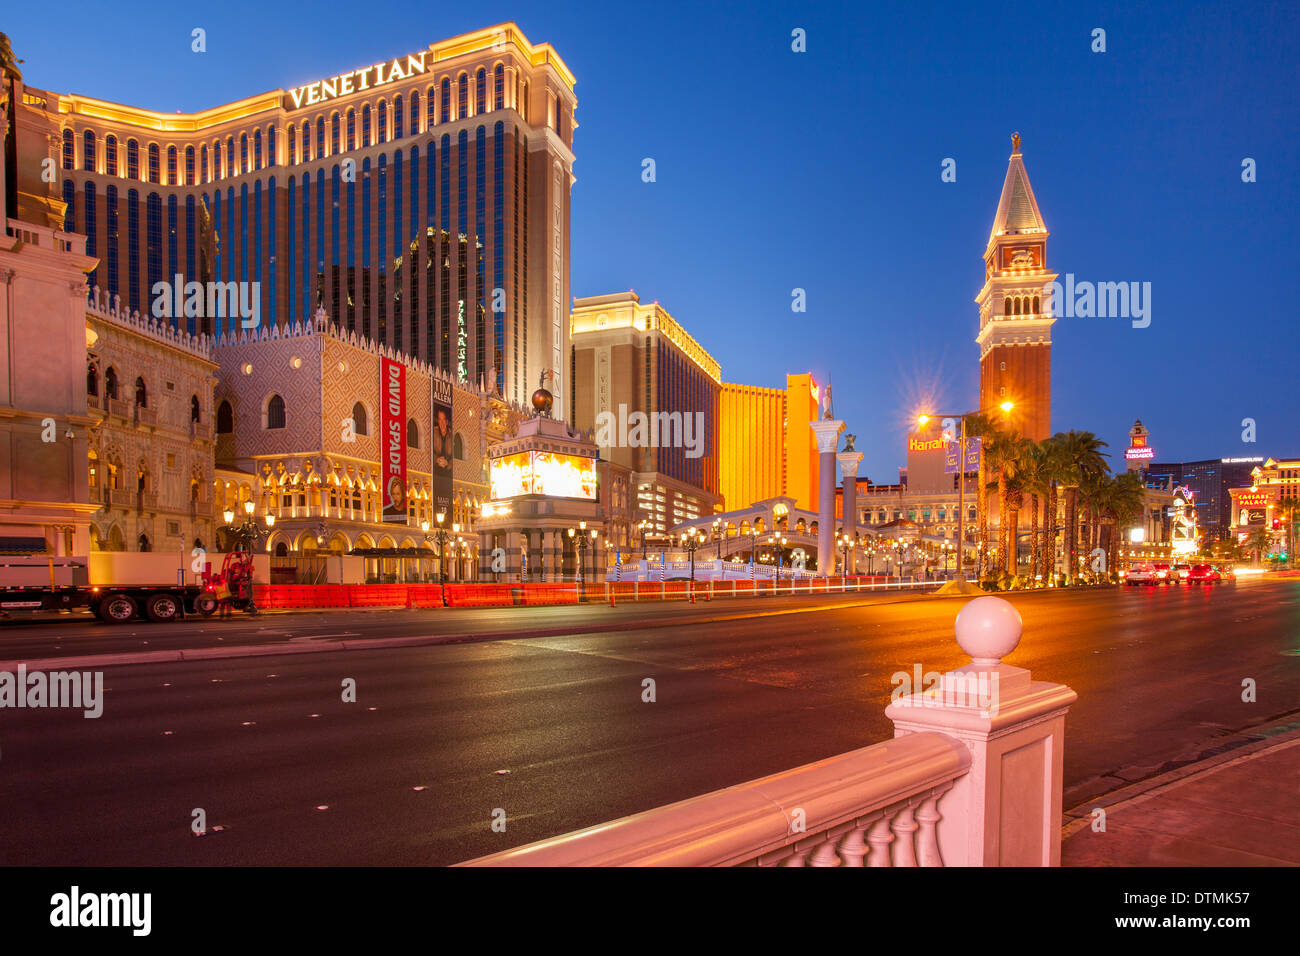 The Venetian Hotel and Casino along the 'Strip' in Las Vegas, Nevada USA Stock Photo